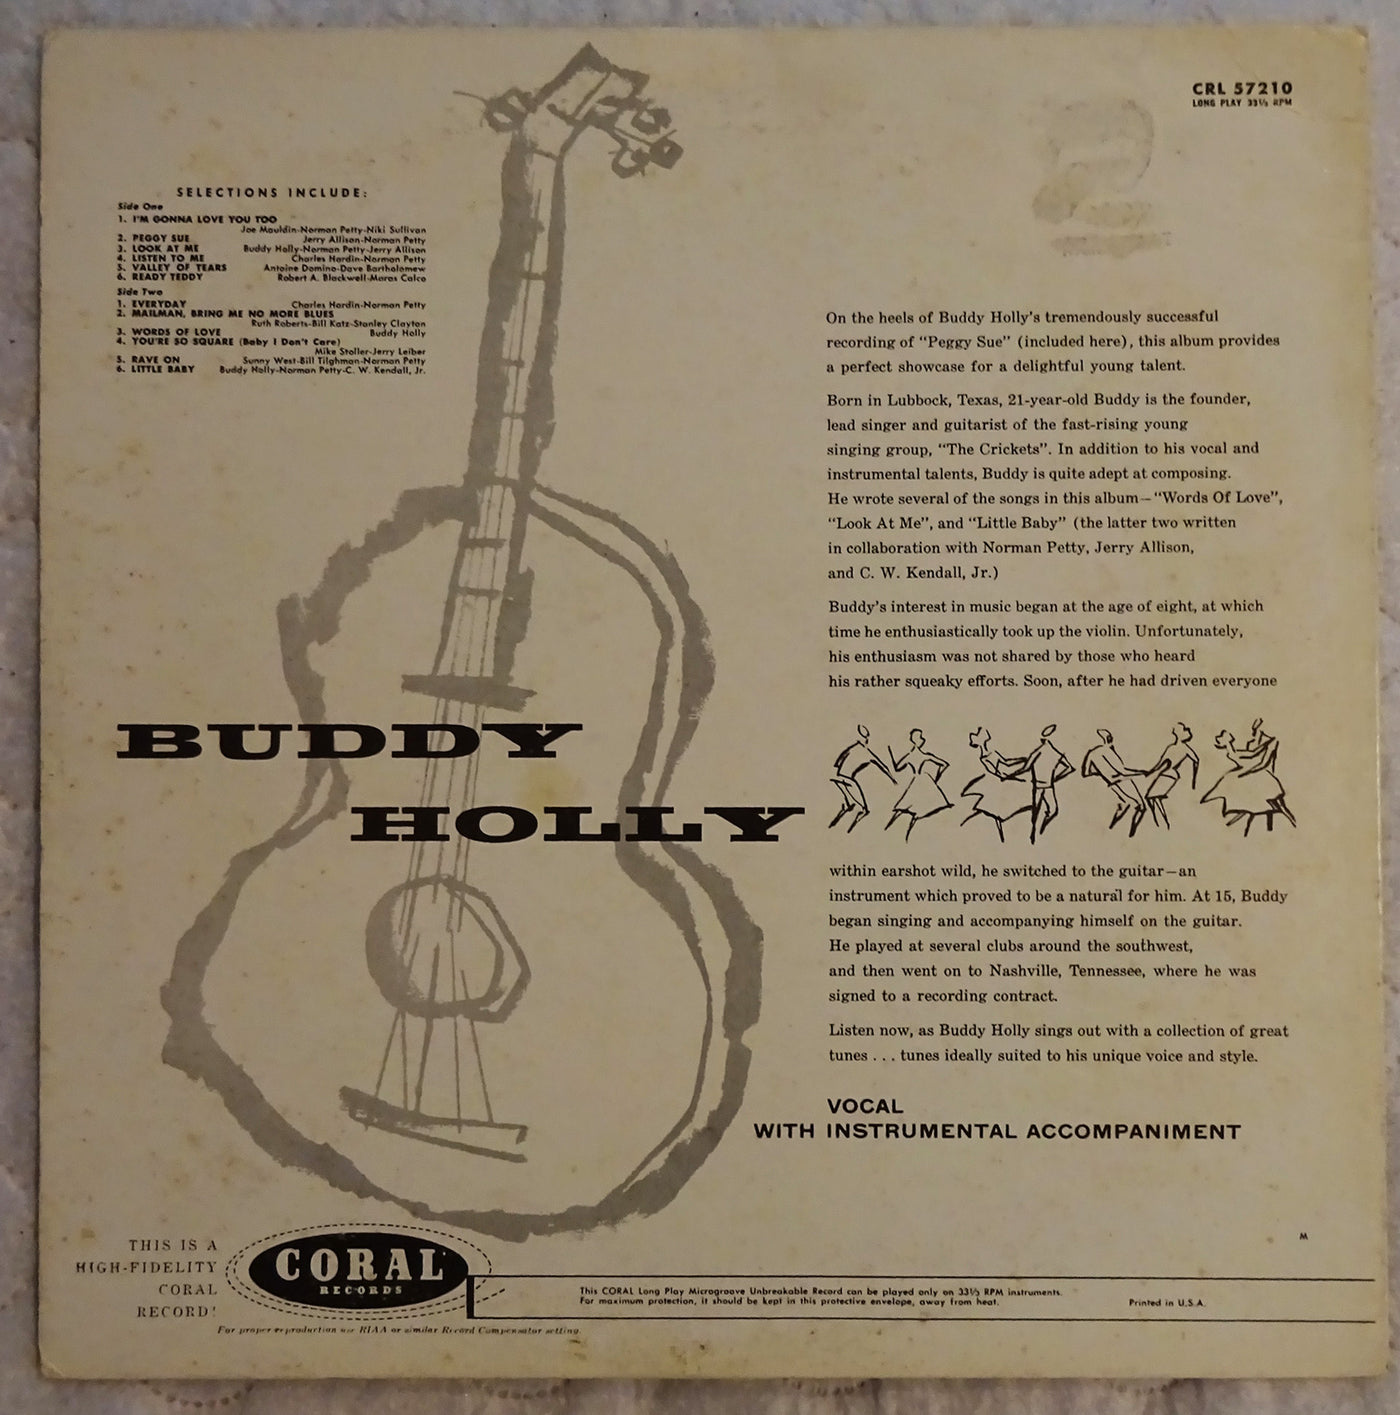 Buddy Holly Self Titled Album Vinyl Record 33rpm CRL 57210